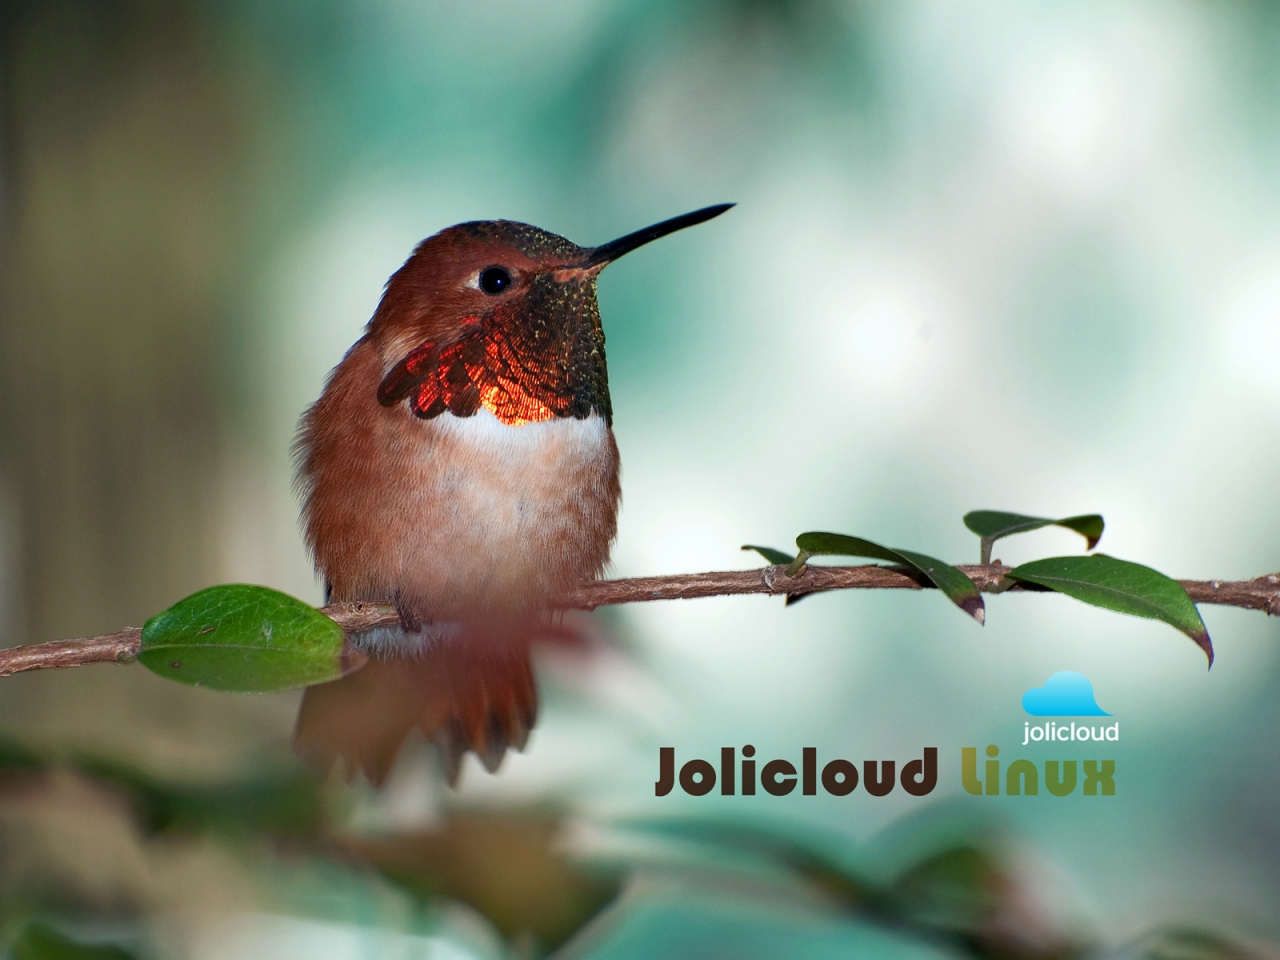 Jolicloud Linux Hummingbird for 1280 x 960 resolution